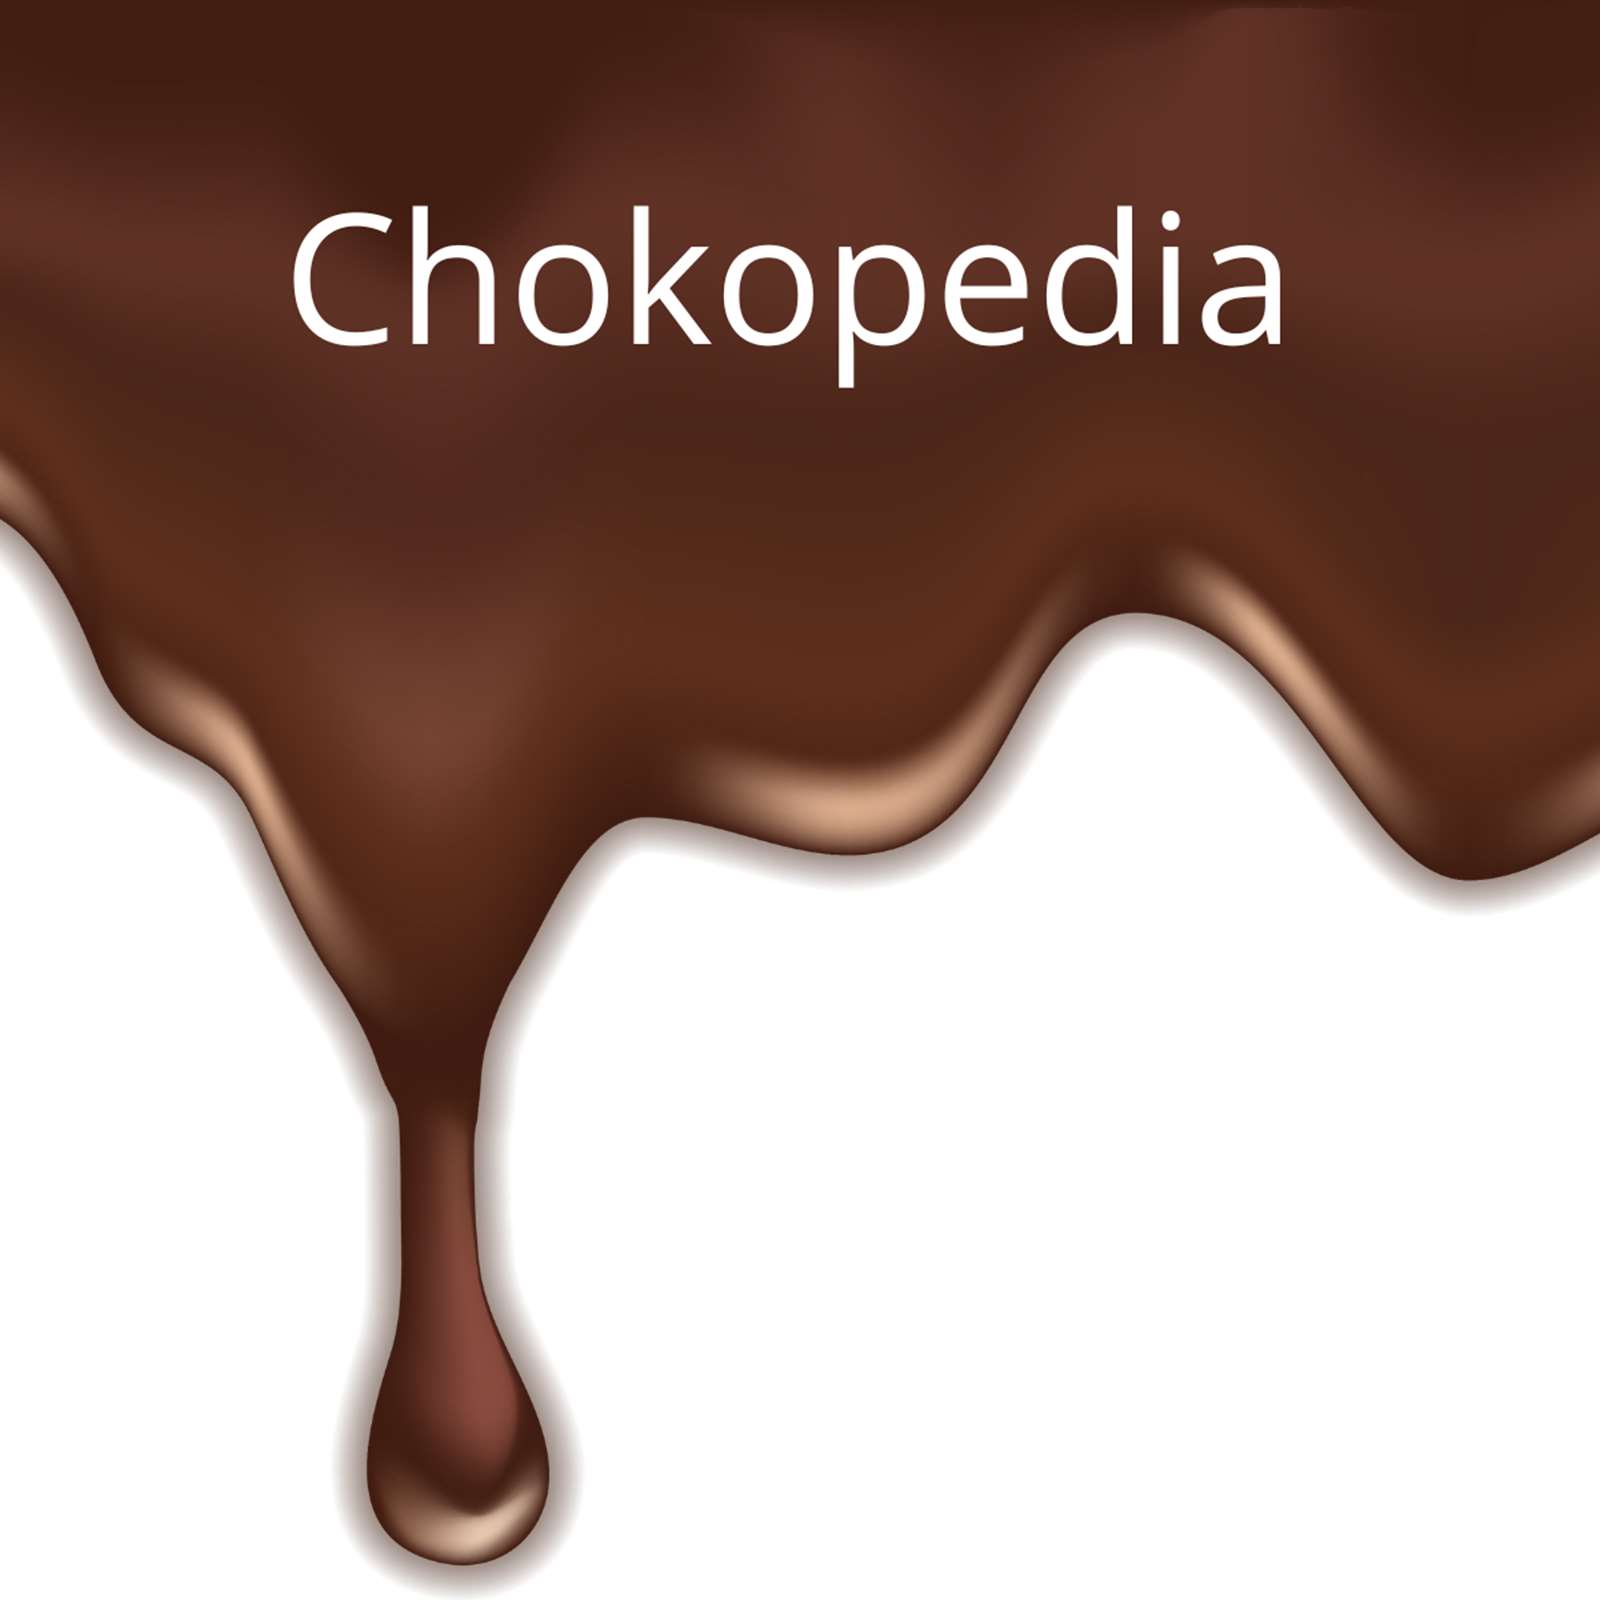 Chokopedia